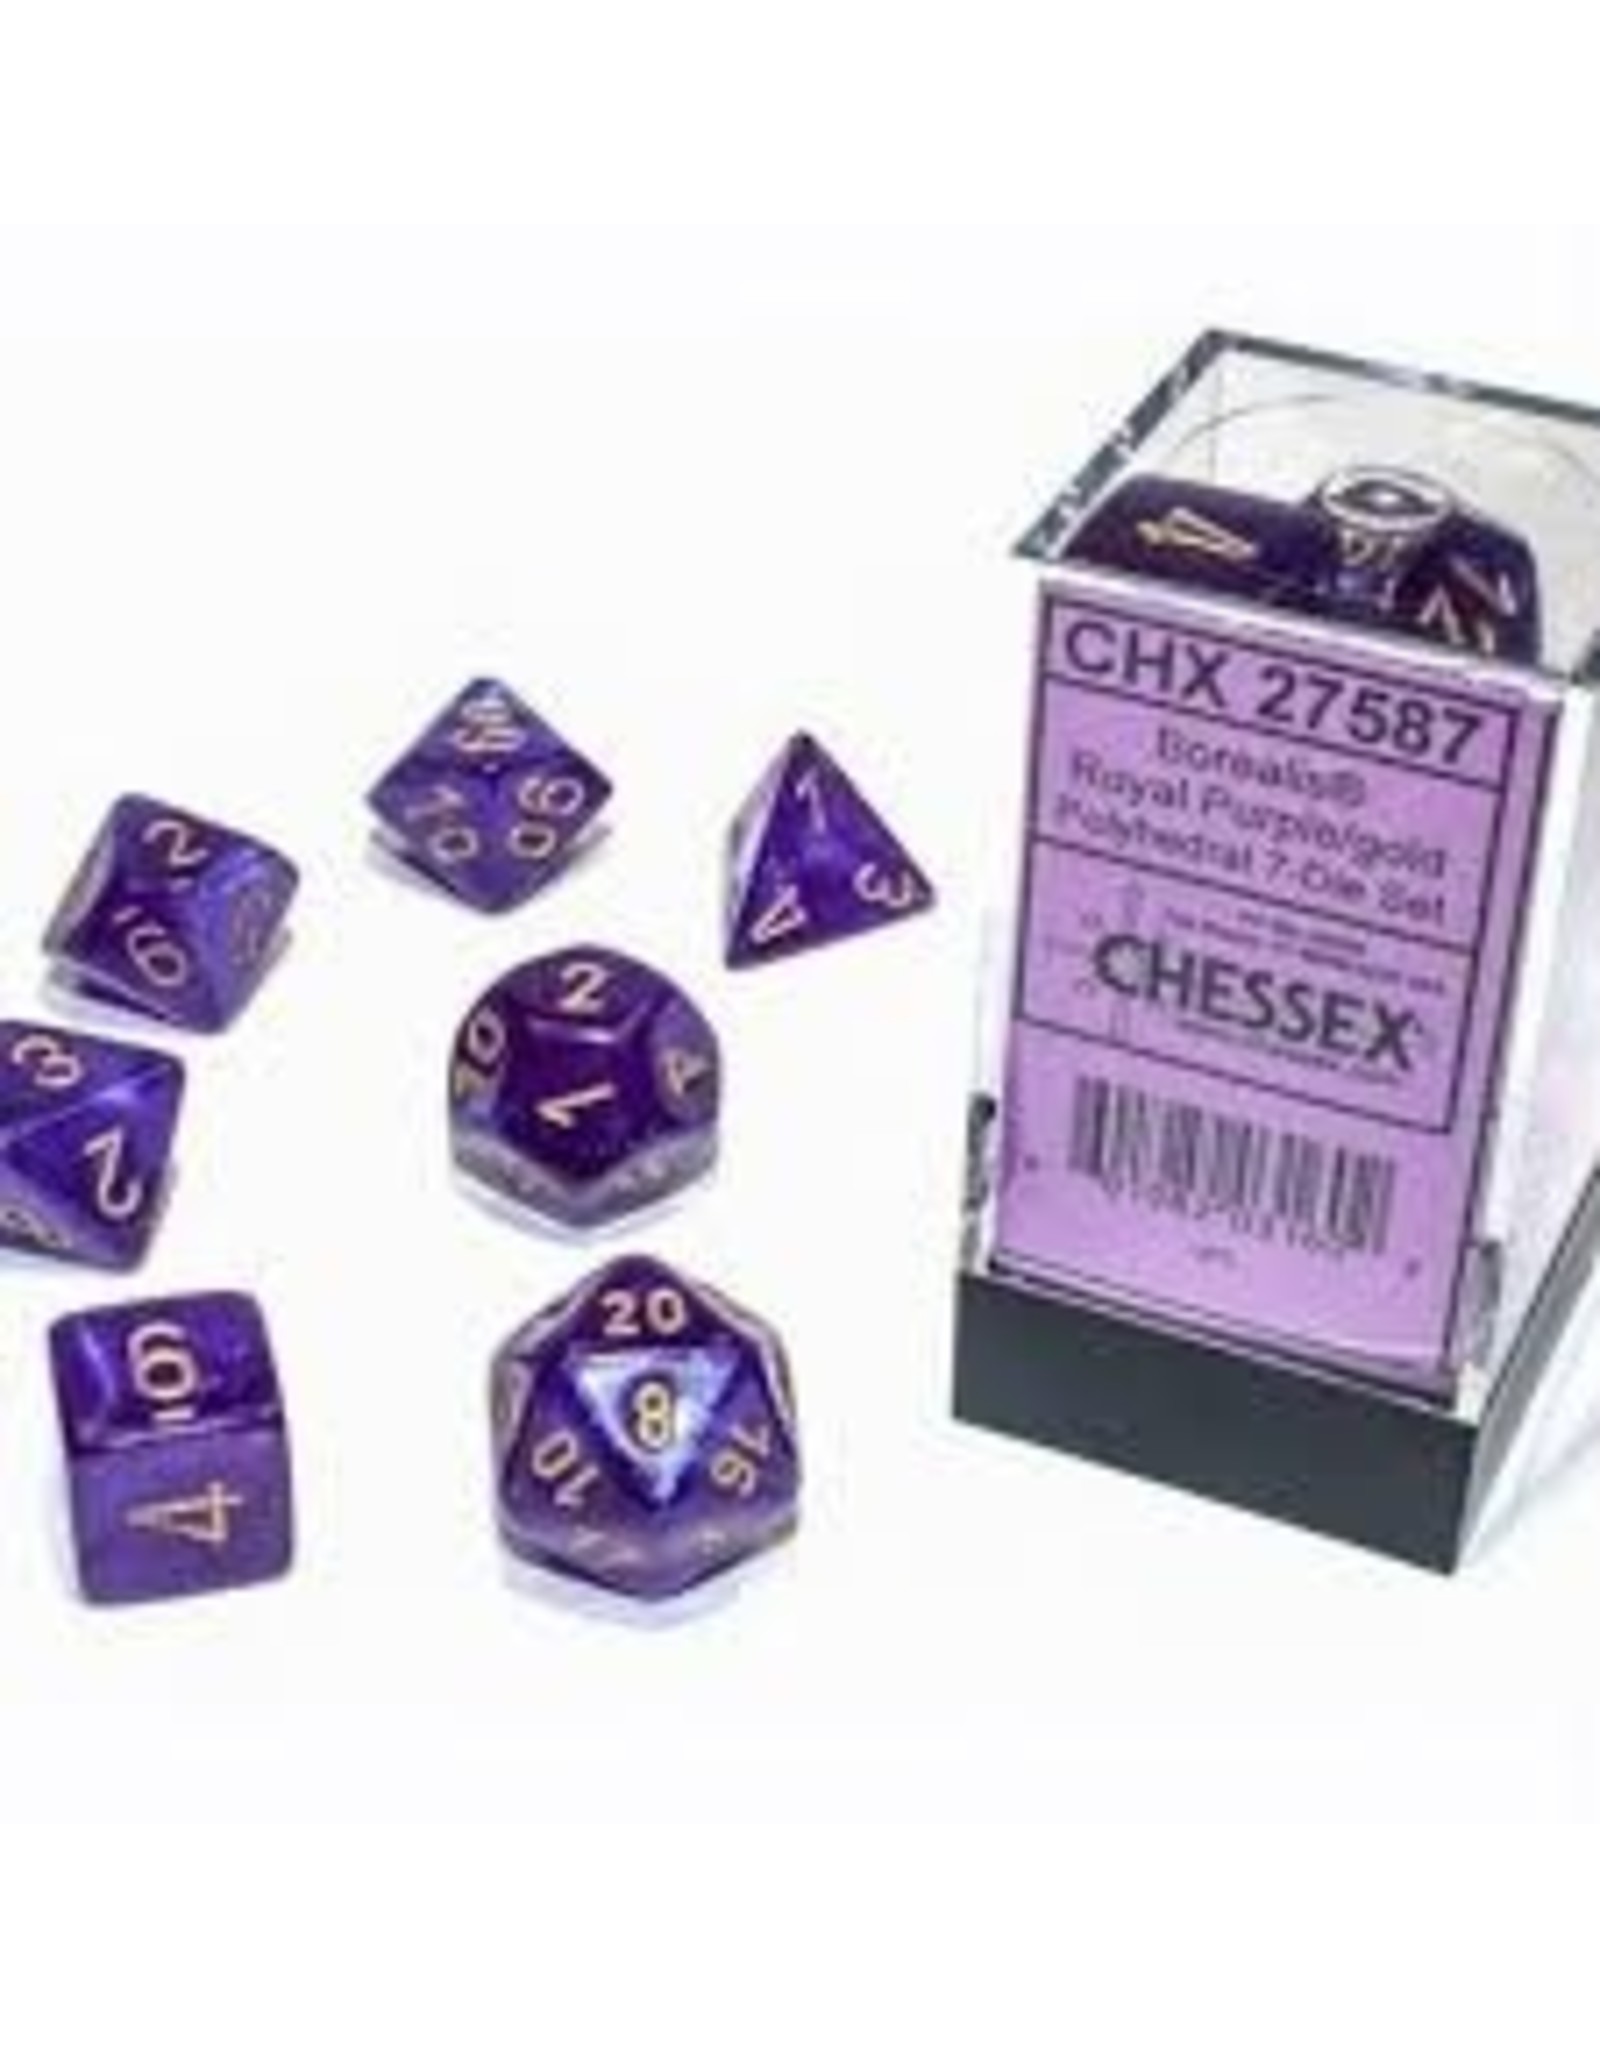 Chessex 7-Set Cube Borealis Luminary Royal Purple with Gold